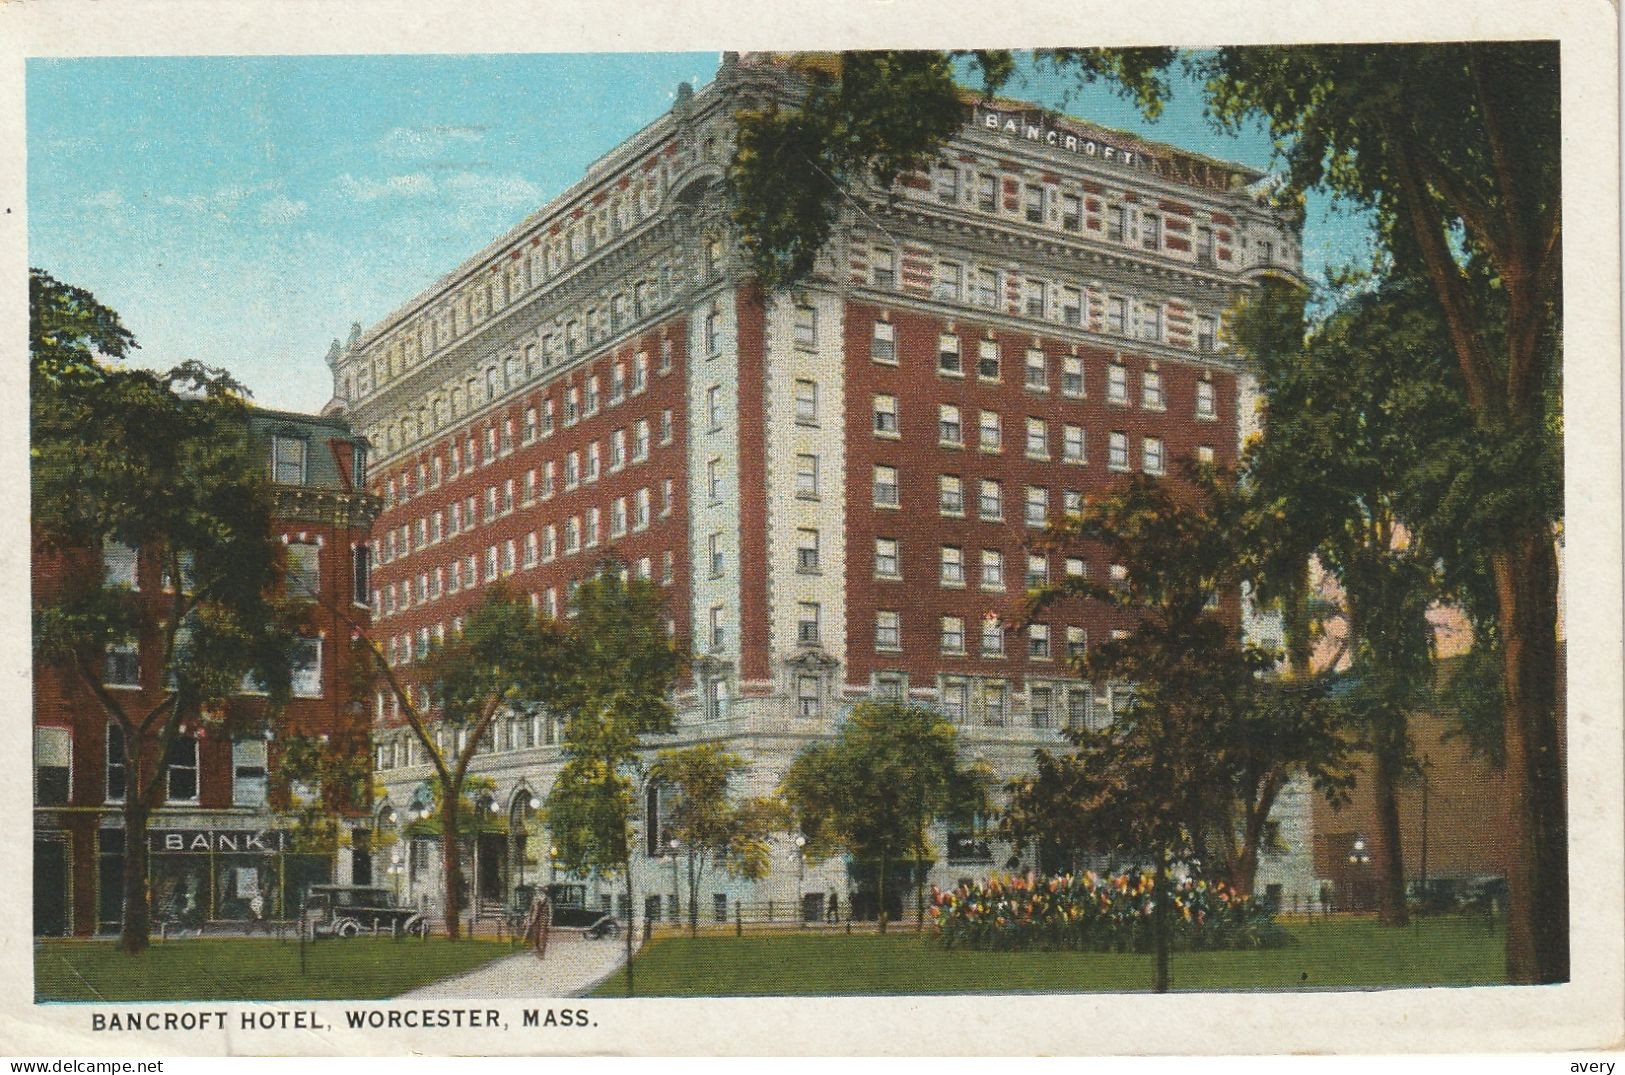 Bancroft Hotel, Worcester, Massachusetts - Worcester